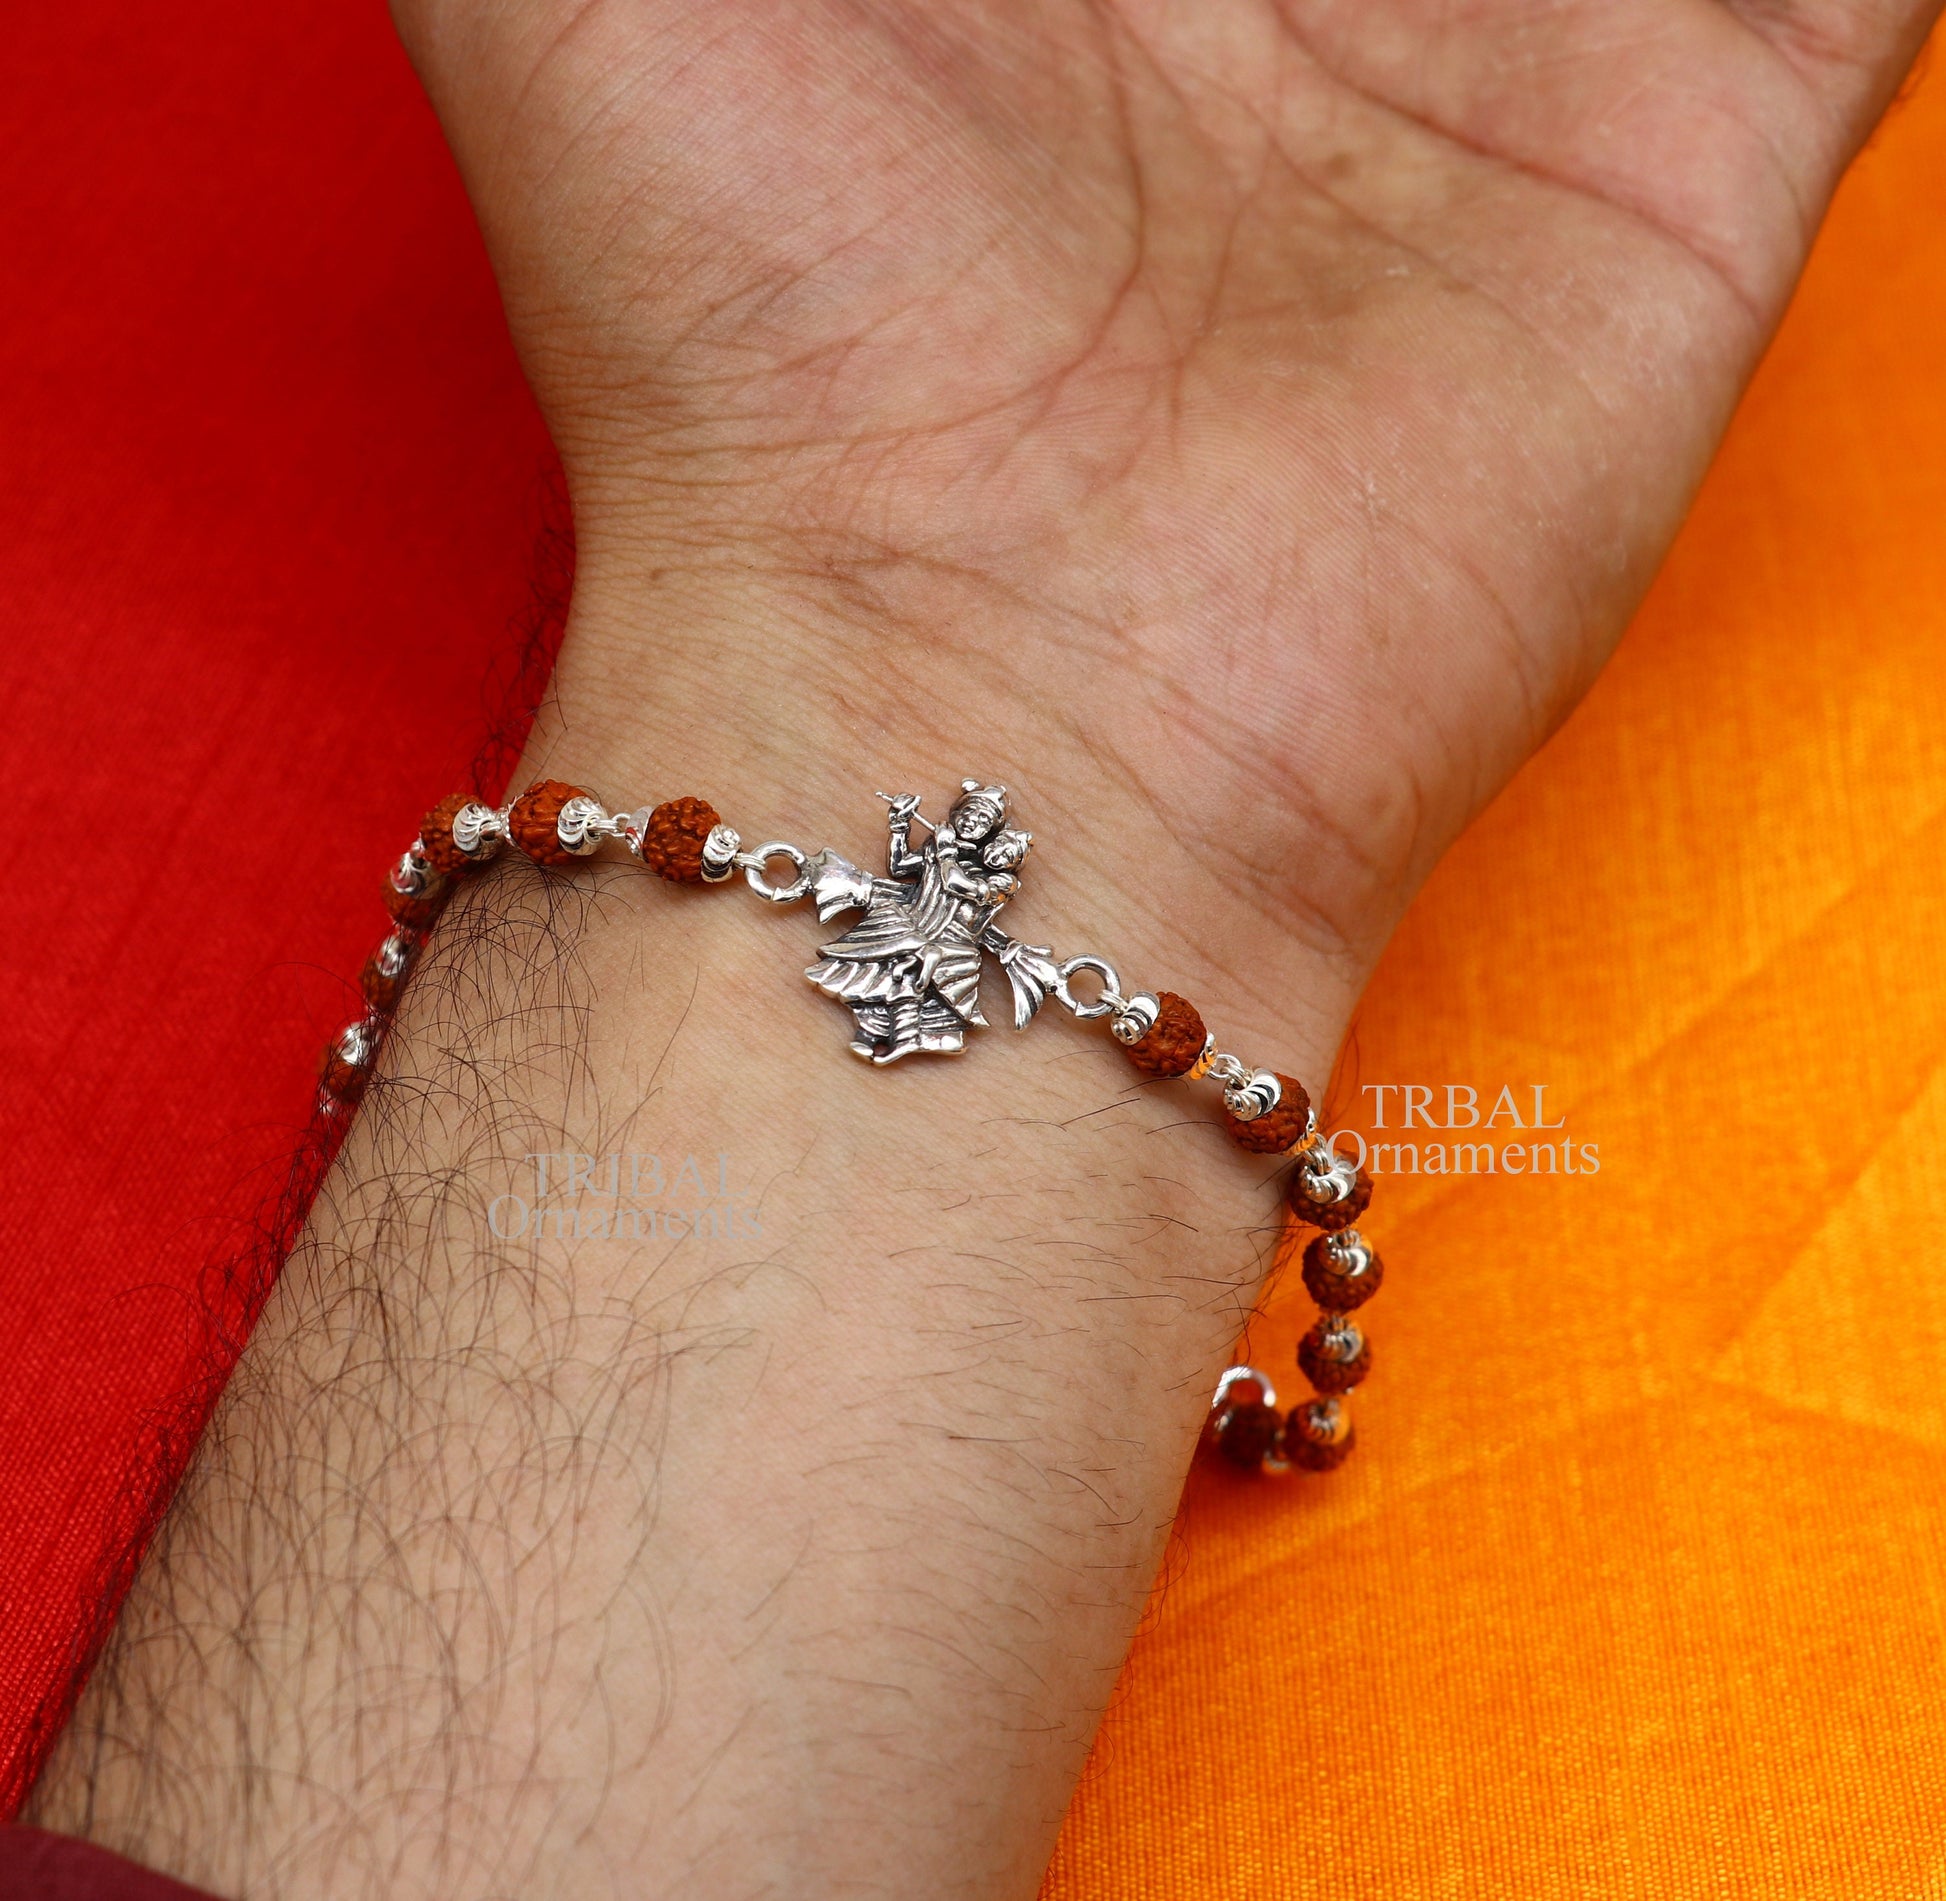 Lord Radha Krishna Rakhi 925 sterling silver handmade stylish divine Rakhi bracelet, amazing Rudraksha, Tulsi beaded bracelet Rakhi rk185 - TRIBAL ORNAMENTS